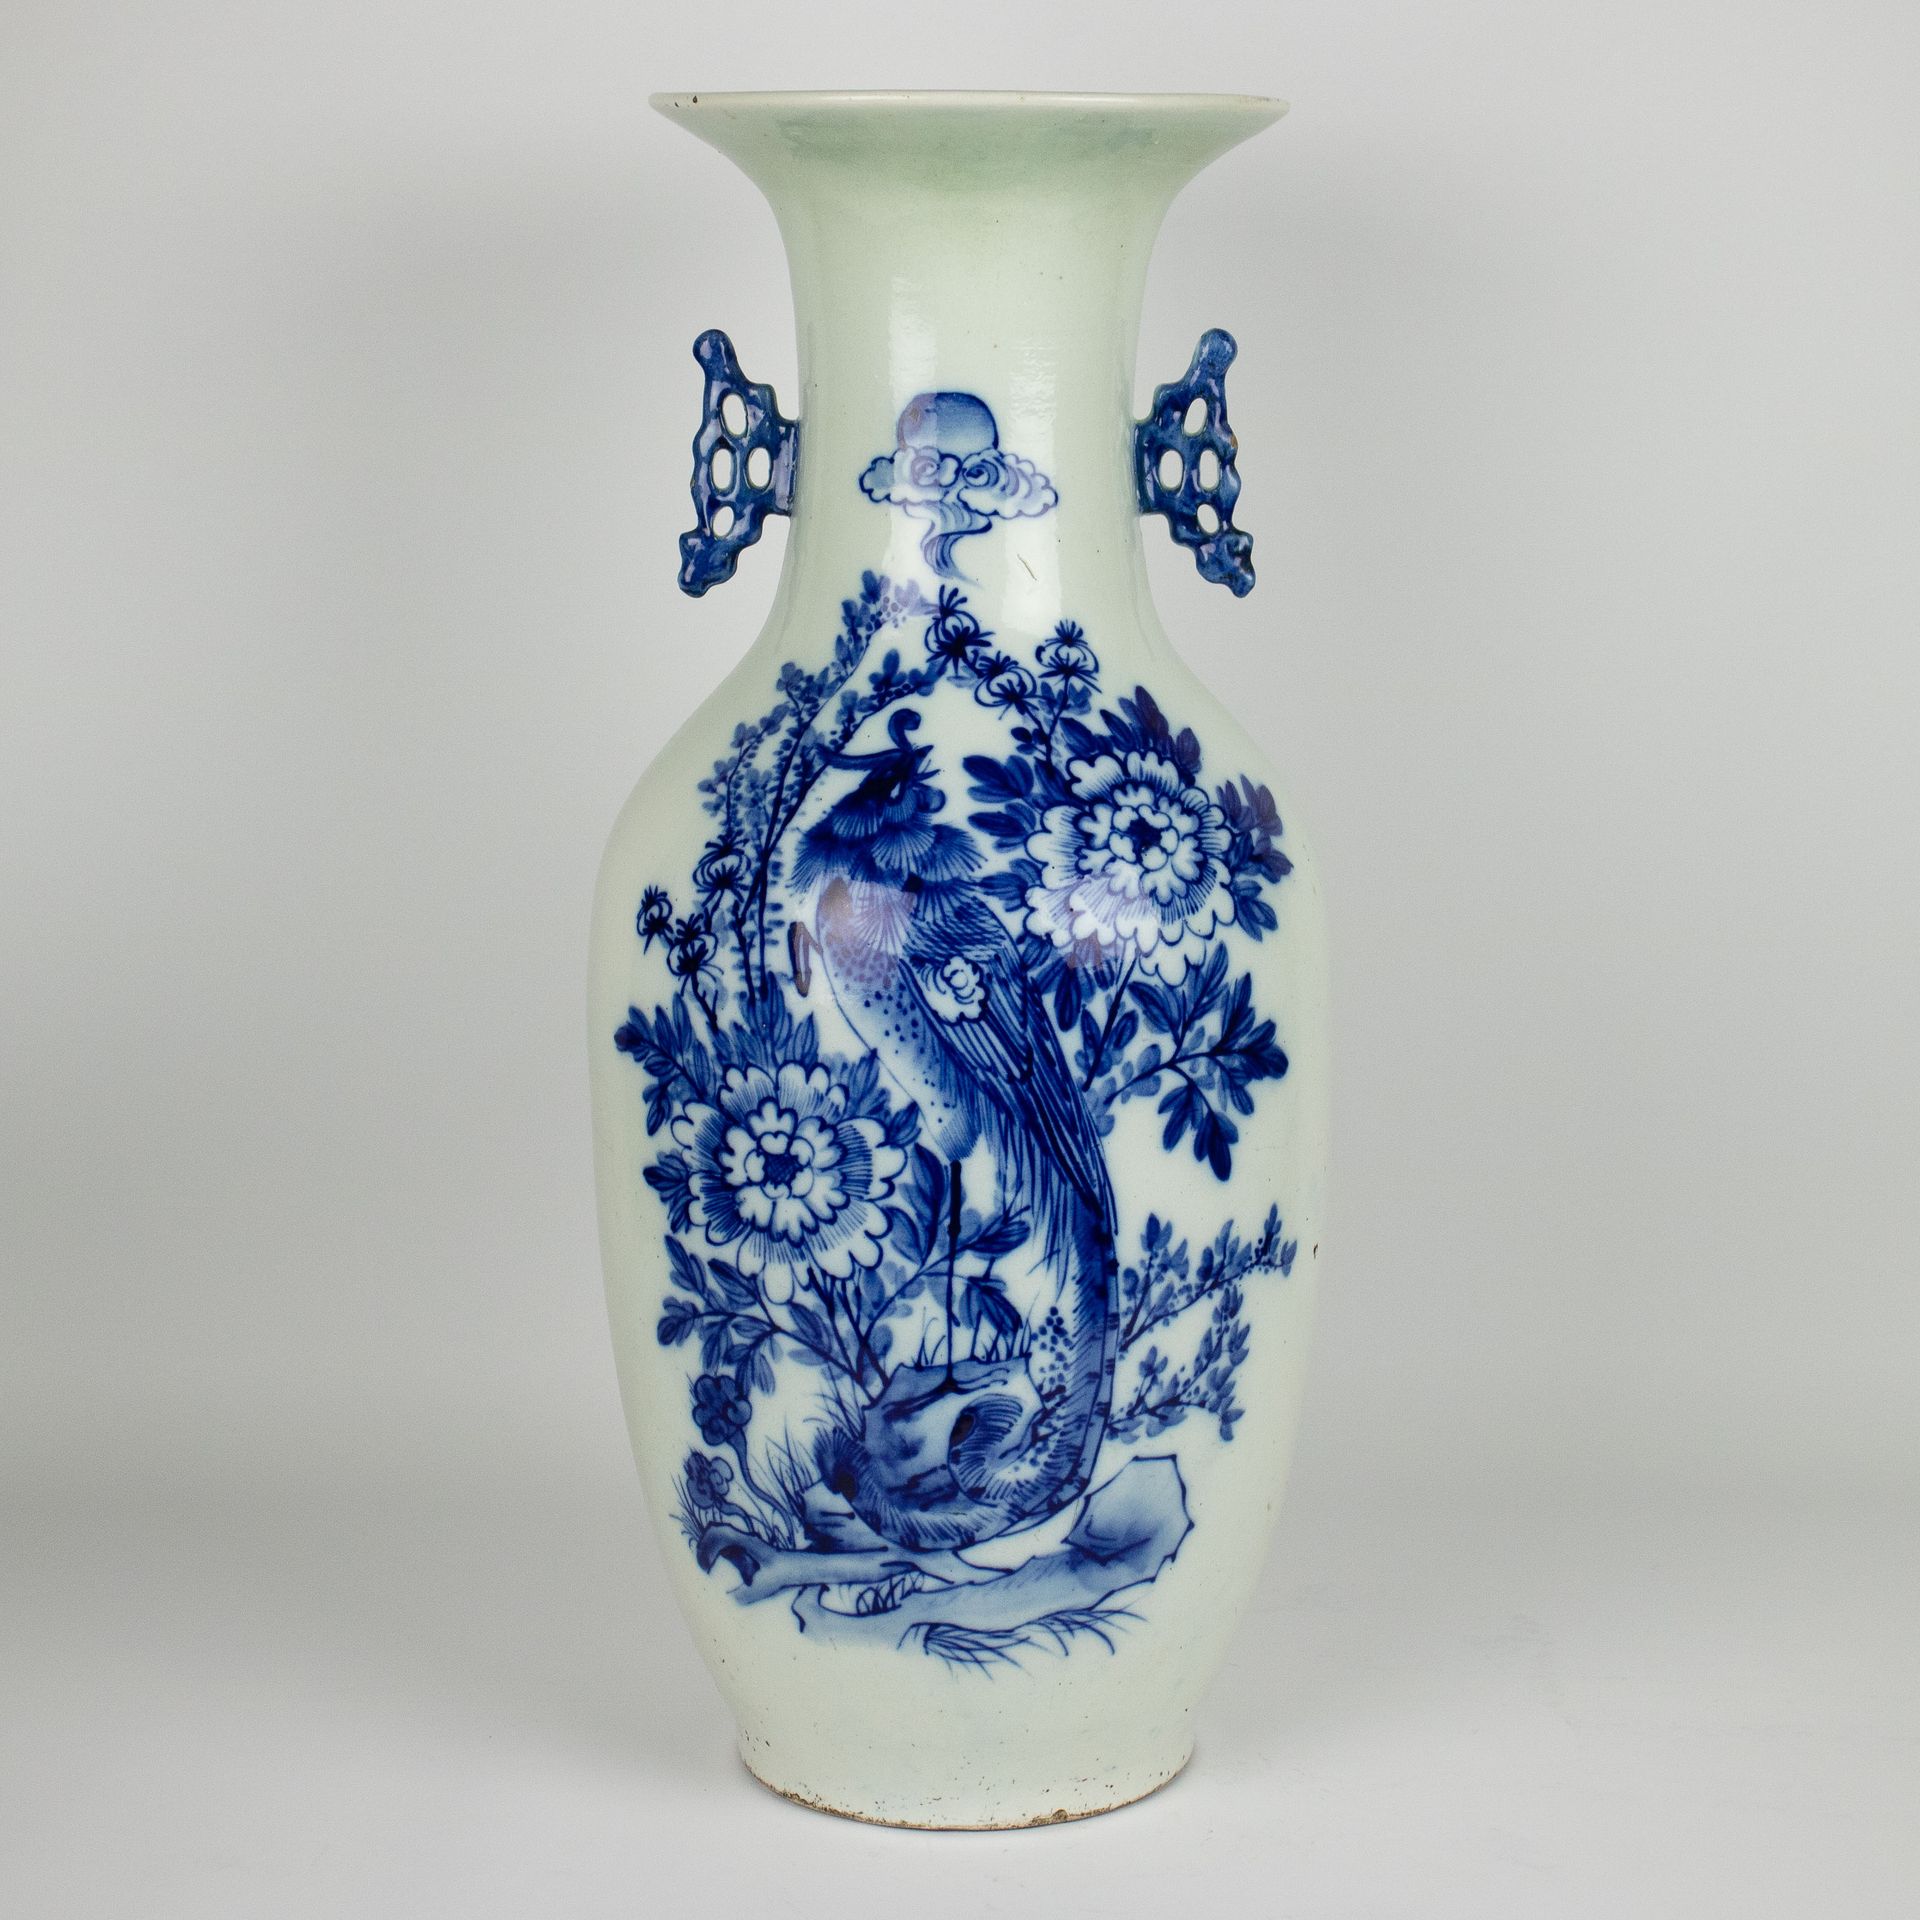 A Chinese celadon vase Republic 饰以鸟类。中国青花瓷瓦罐上的鸟类装饰。共和国时期。
高58.5厘米